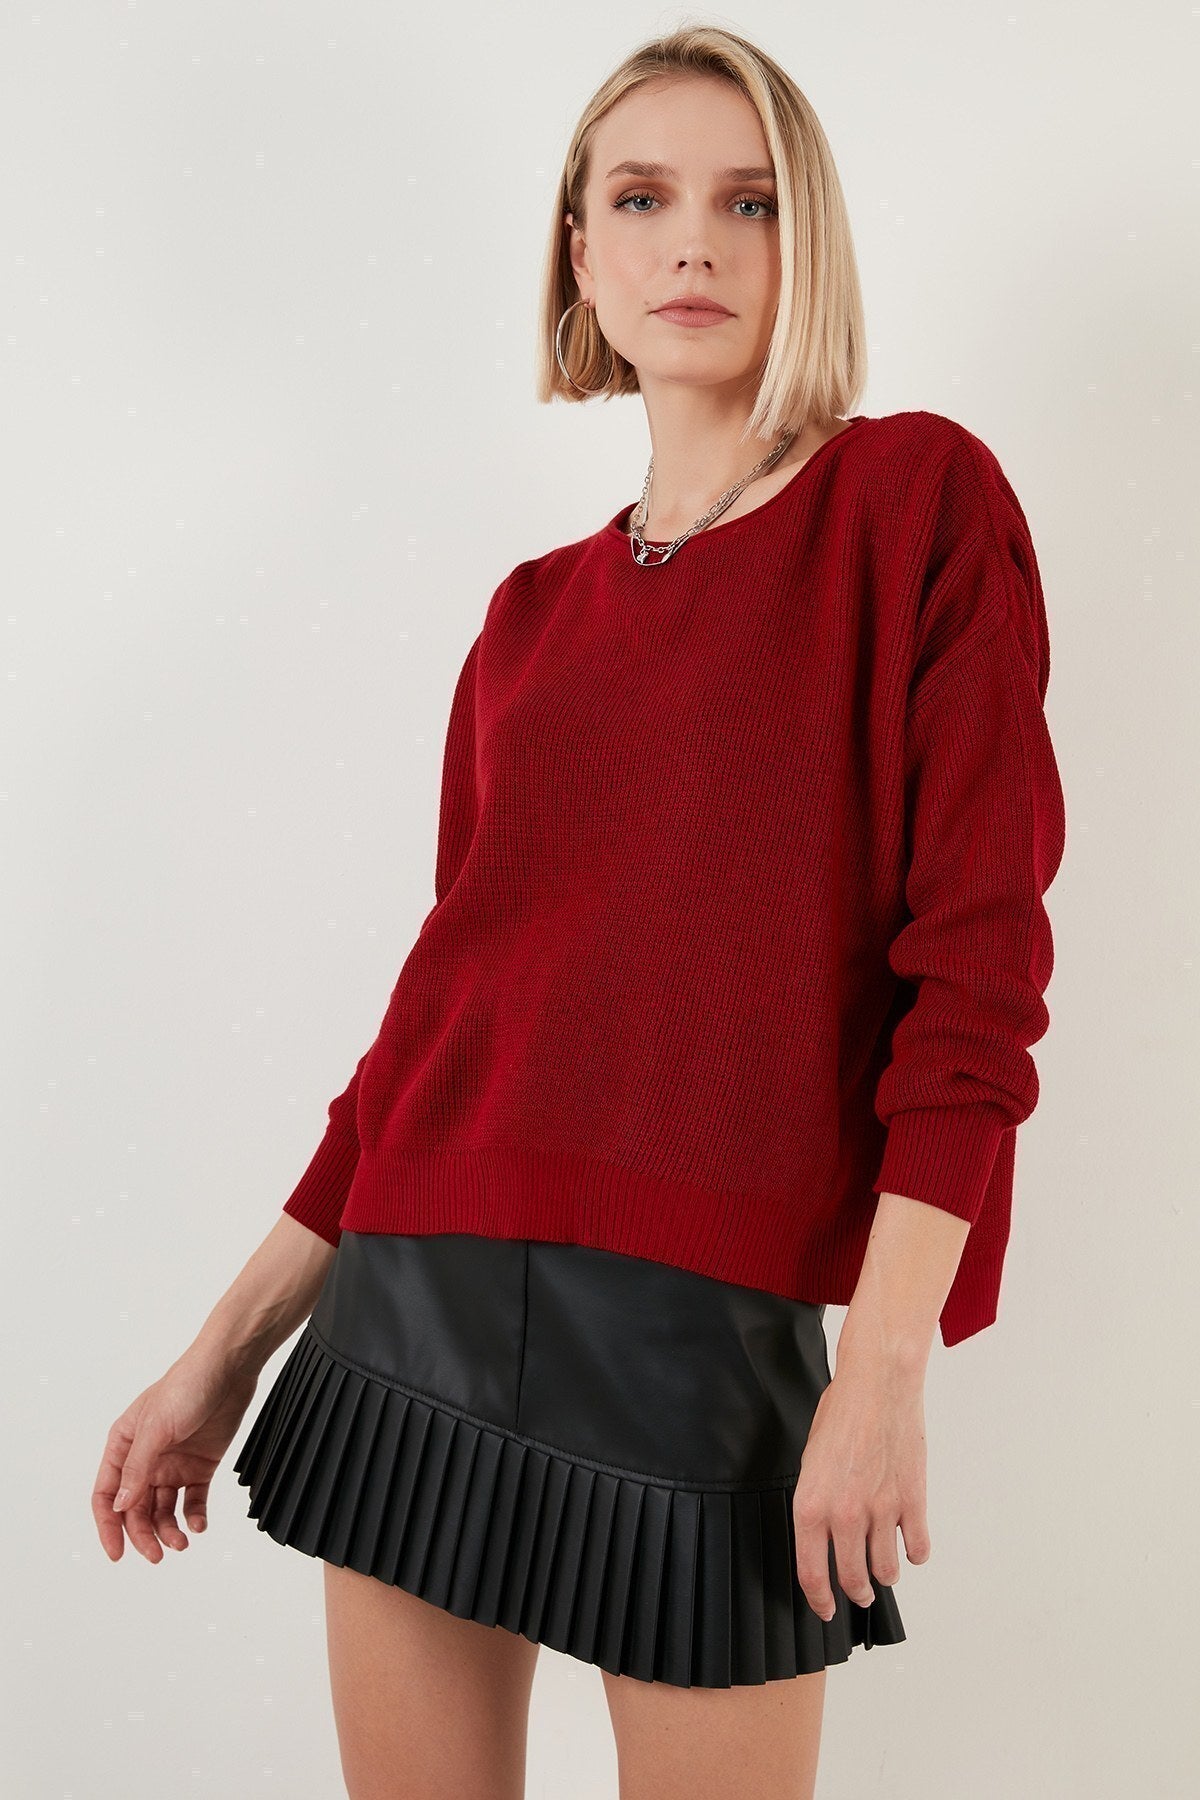 Lela Crew Neck 100% Soft Acrylic Women's Sweater - RED